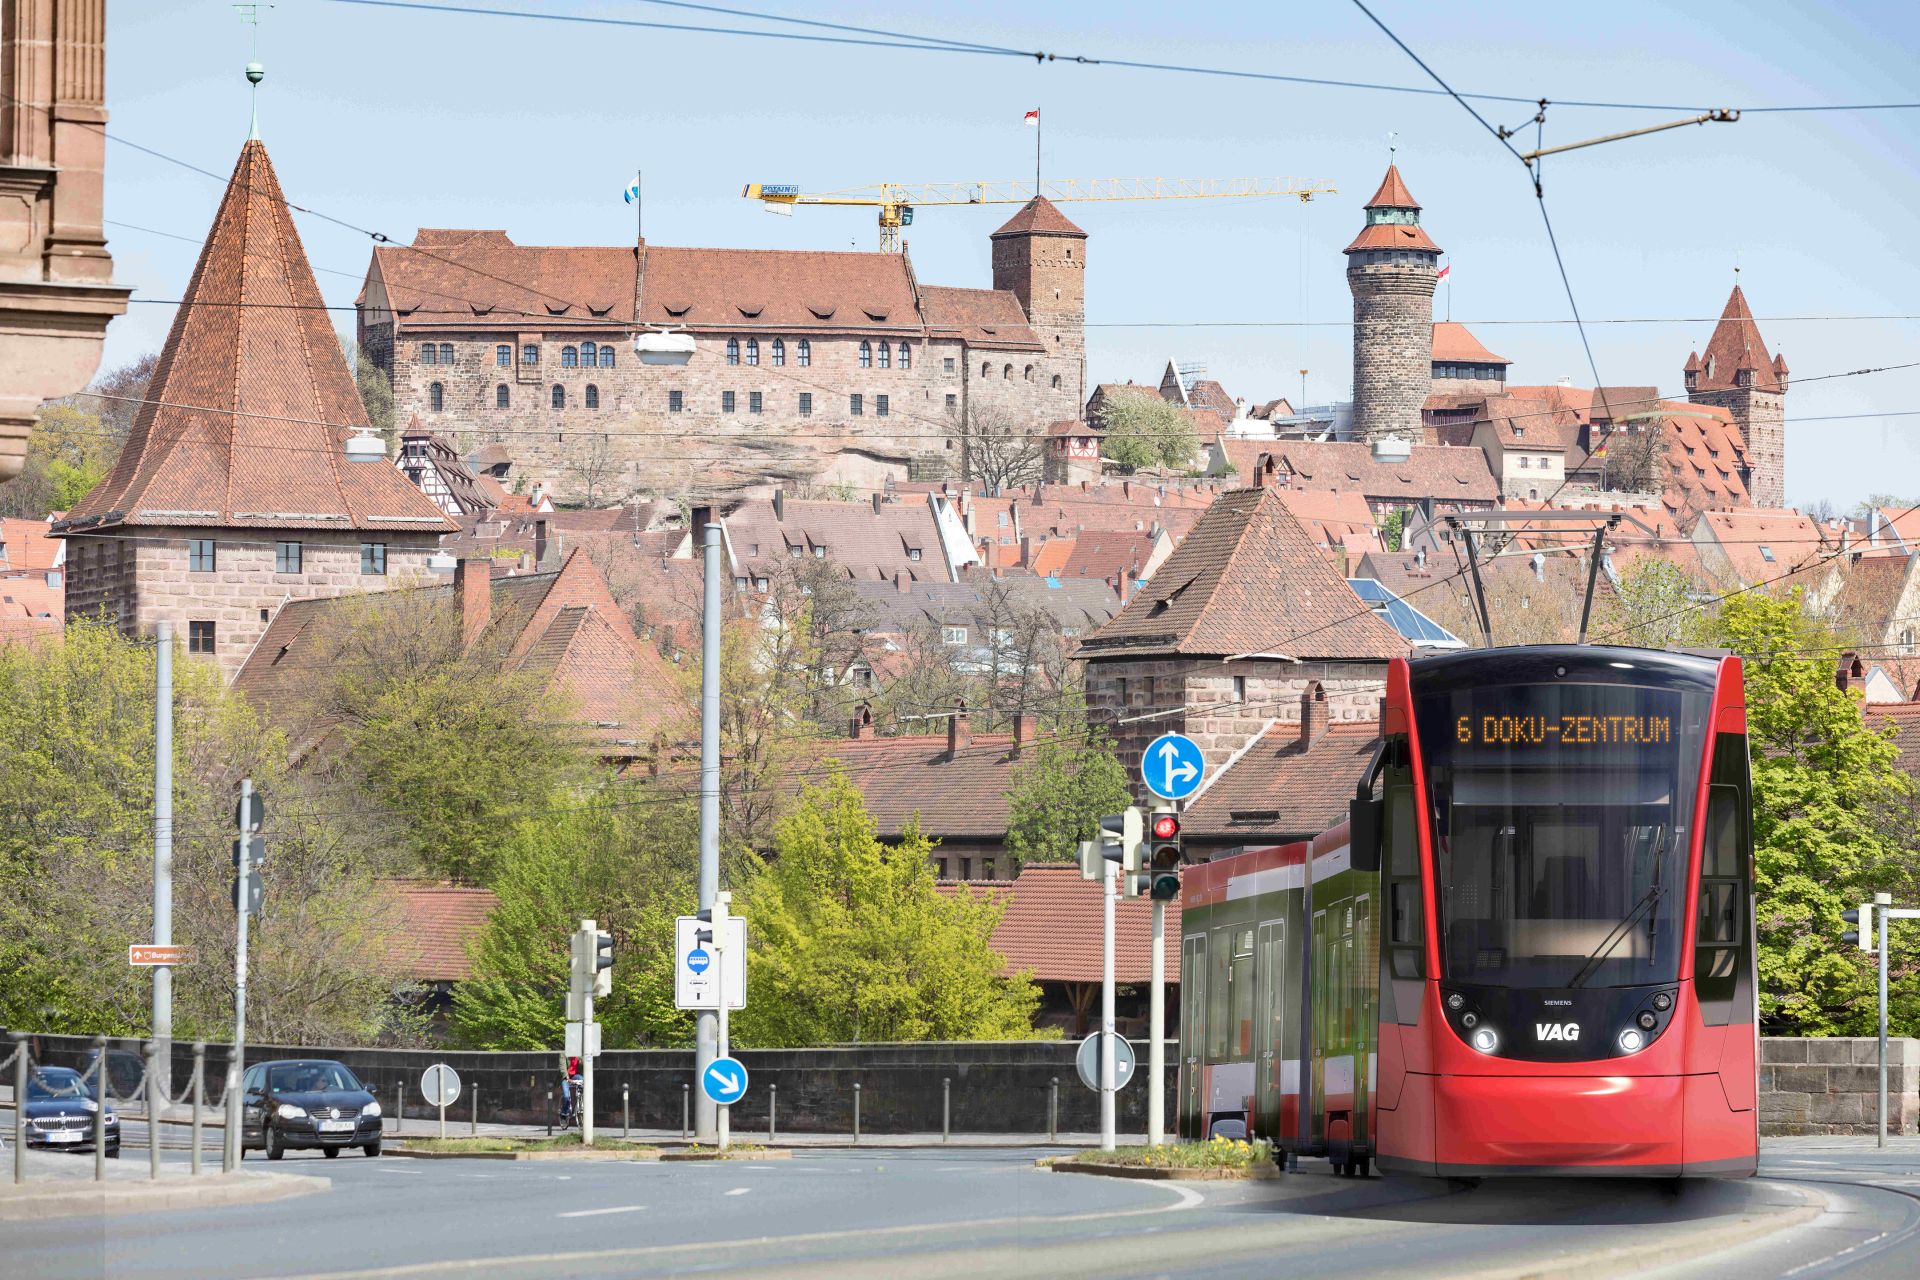 Nová tramvaj Siemens Avenio na vizualizaci v ulicích Norimberku. Foto: Siemens